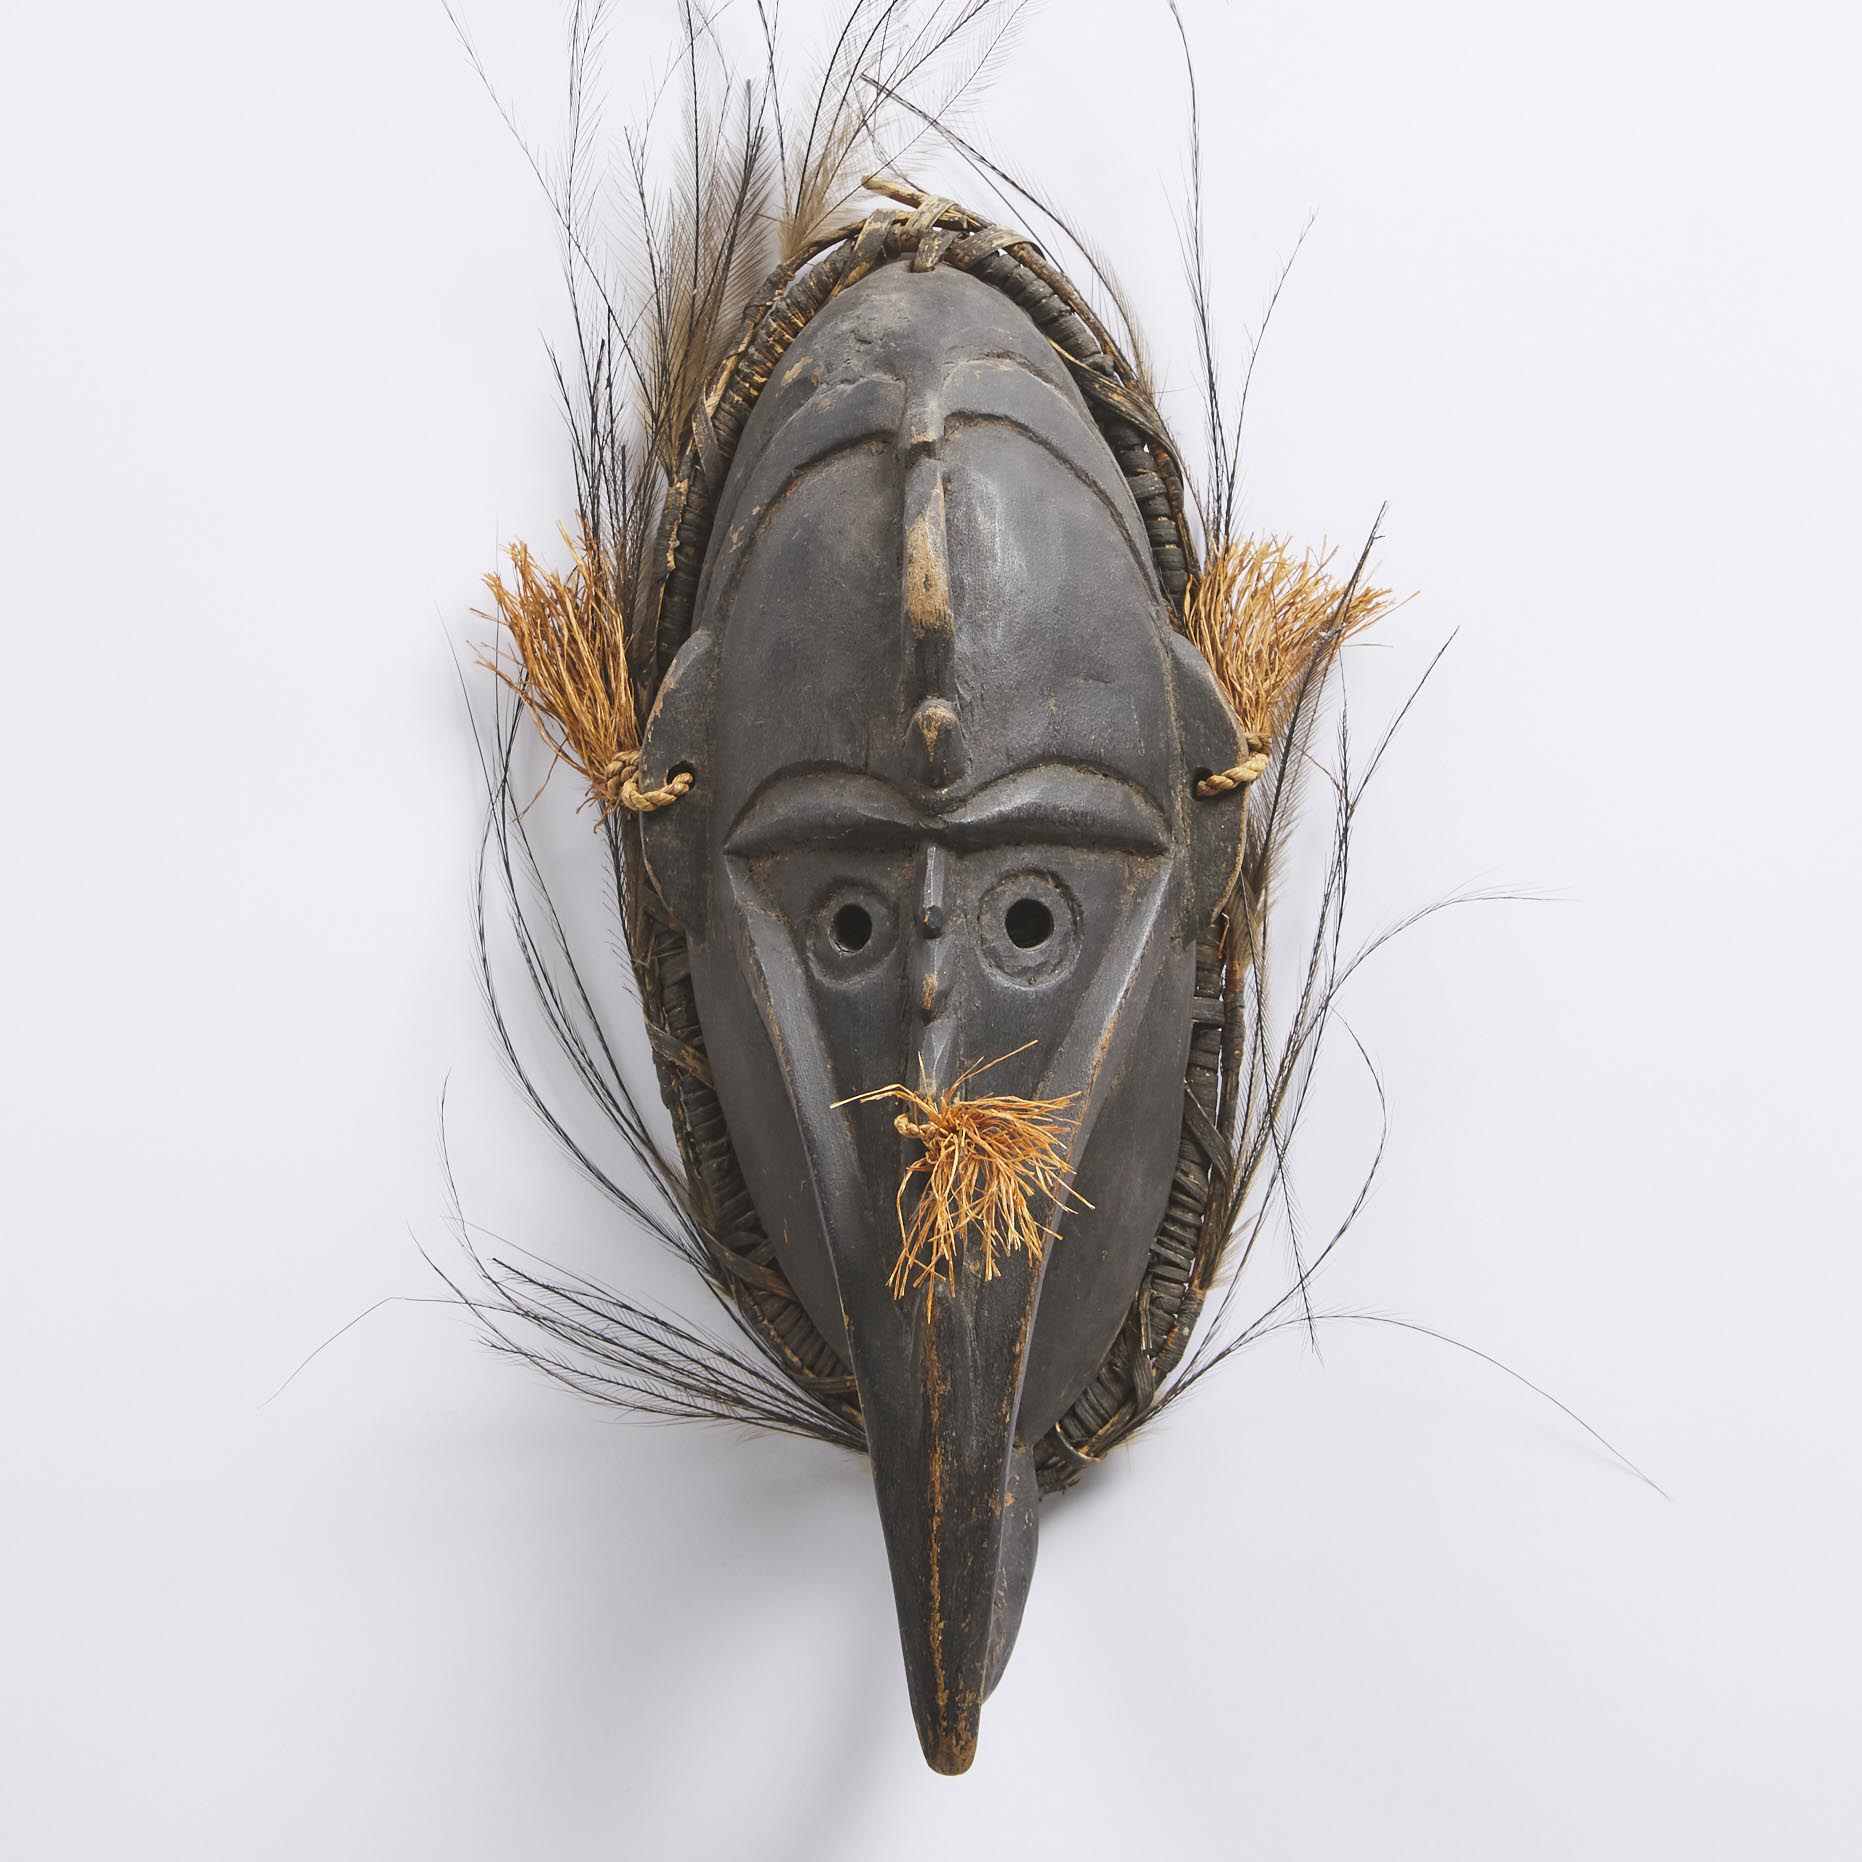 Sepik River Mask, Papua New Guinea, mid 20th century